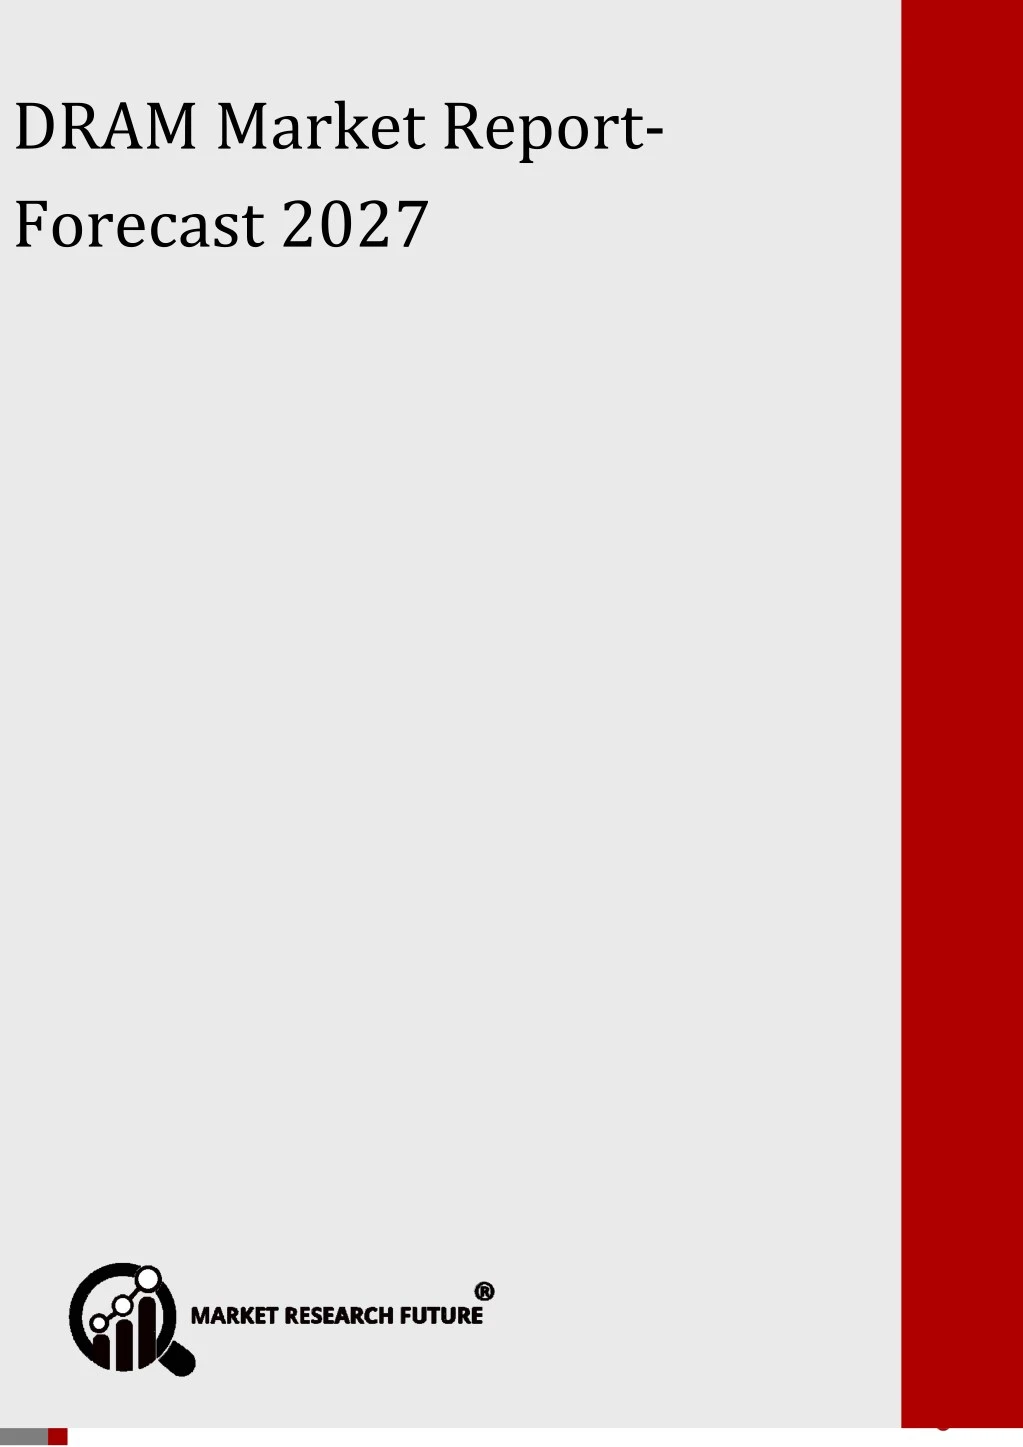 dram market report forecast 2027 dram market